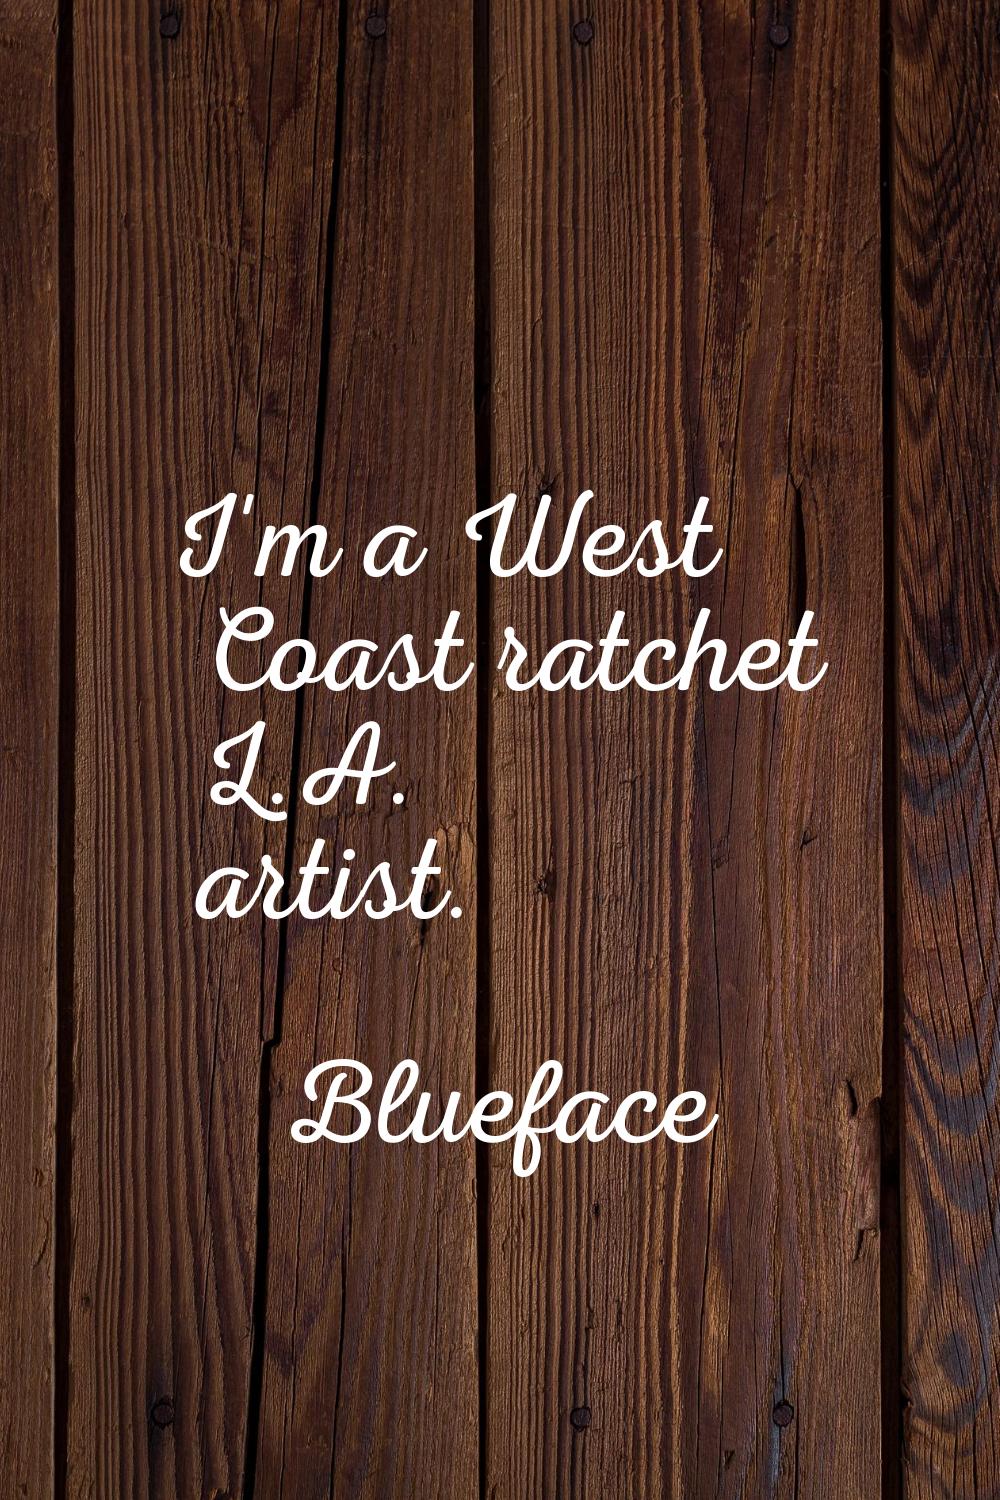 I'm a West Coast ratchet L.A. artist.